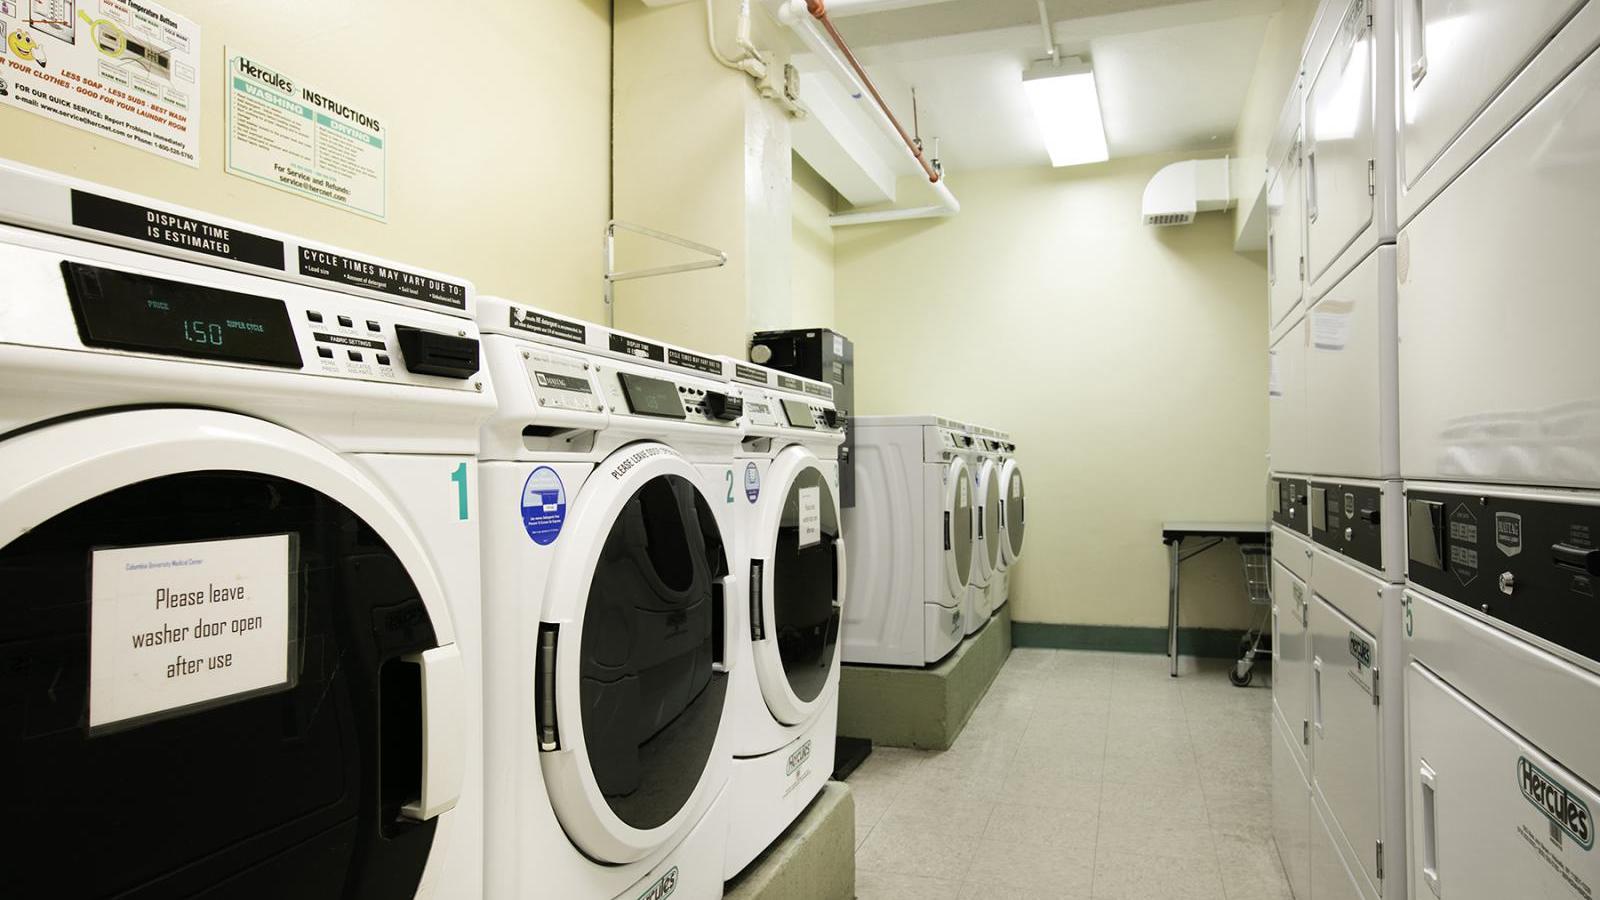 Laundry Services  University Housing